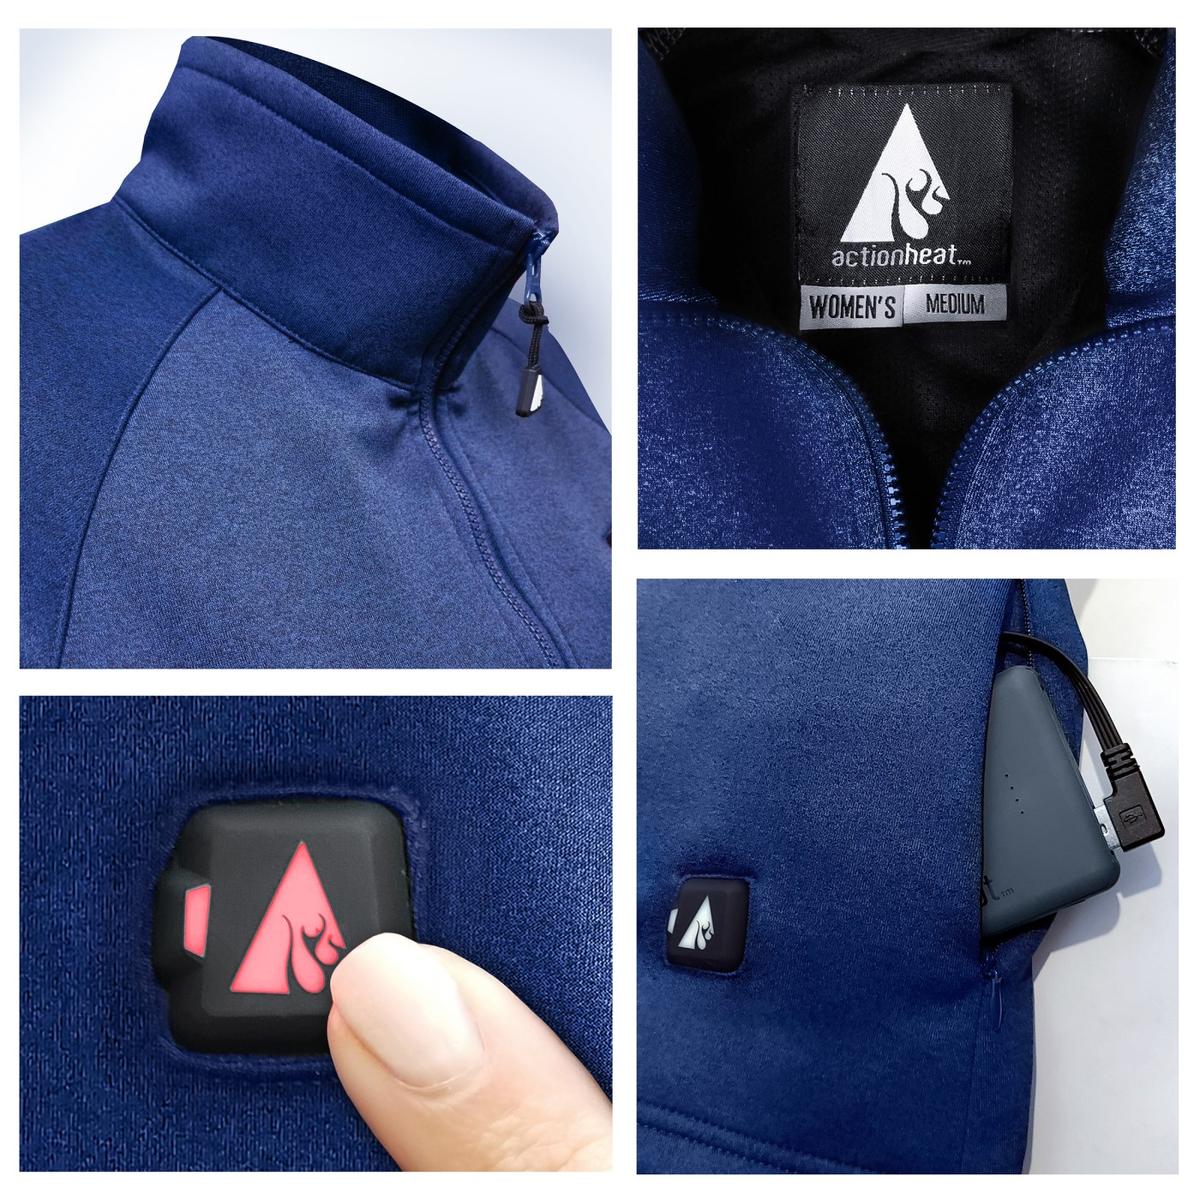 ActionHeat 5V Women's 1/2 Zip Pullover Battery Heated Shirt - Battery